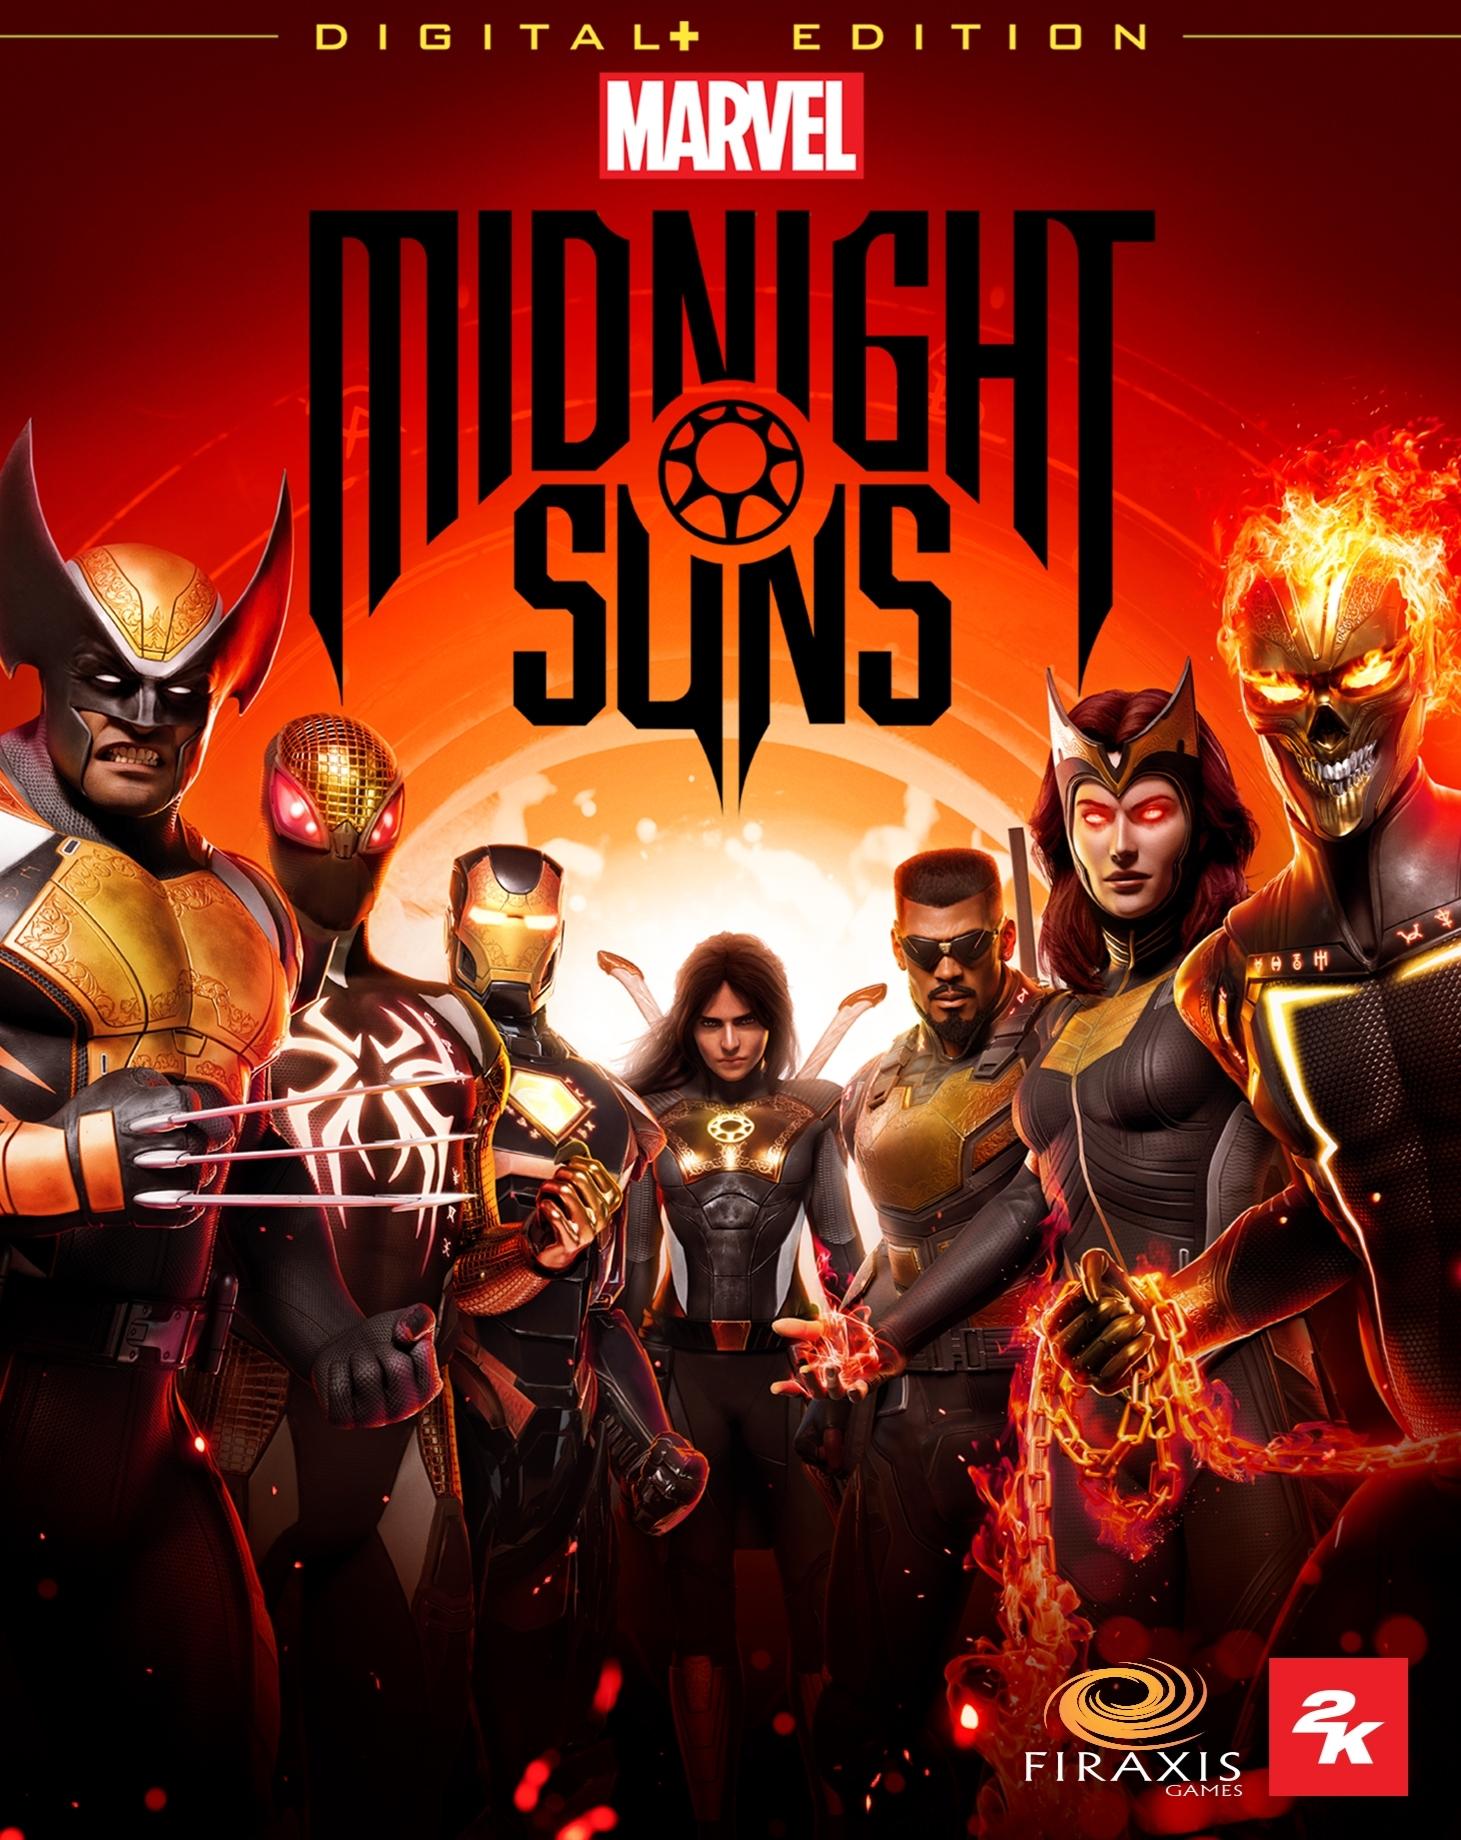 Marvel's Midnight Suns - Digital+ Edition (EPIC) - Pre Order | ROW (86f8a05b-b2d6-4fe2-a119-d817b8b7ee1c)